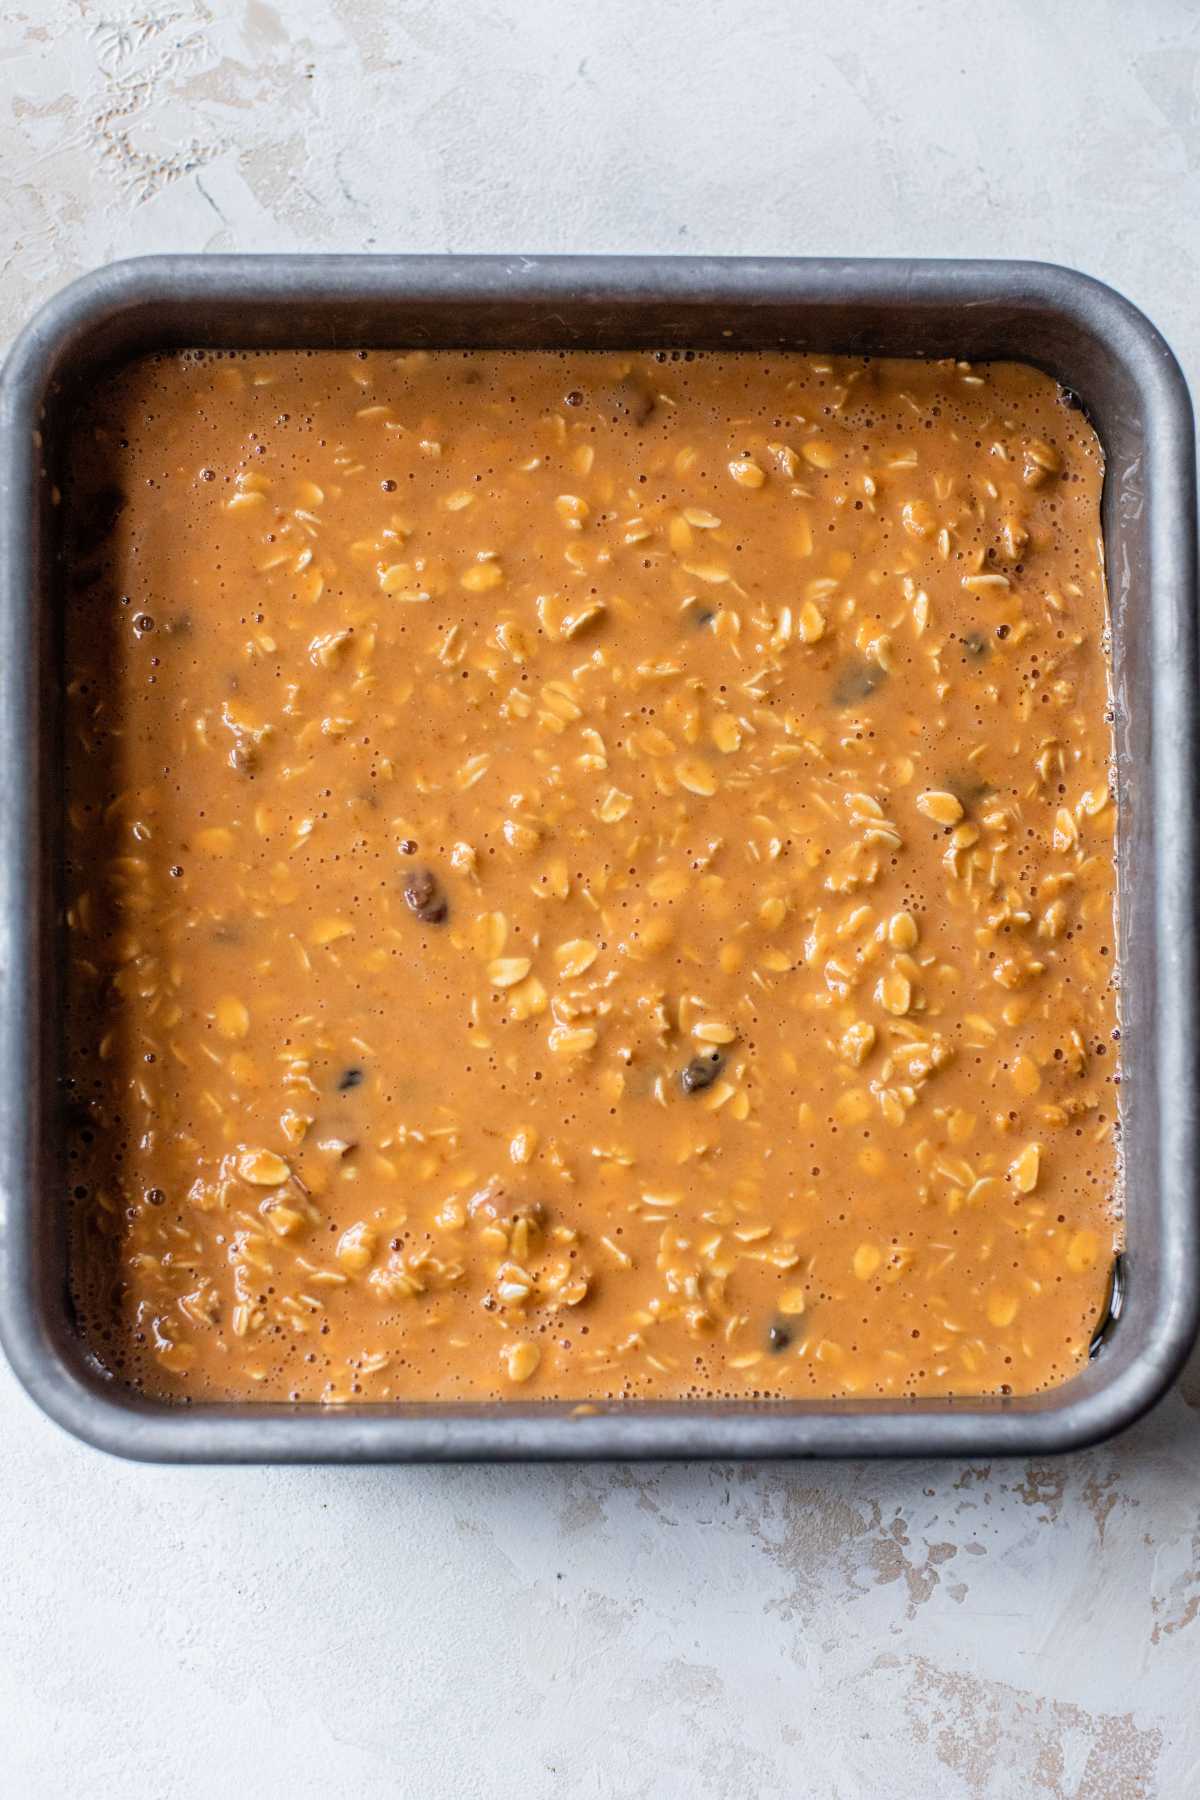 Oat and pumpkin mixture in a baking pan.